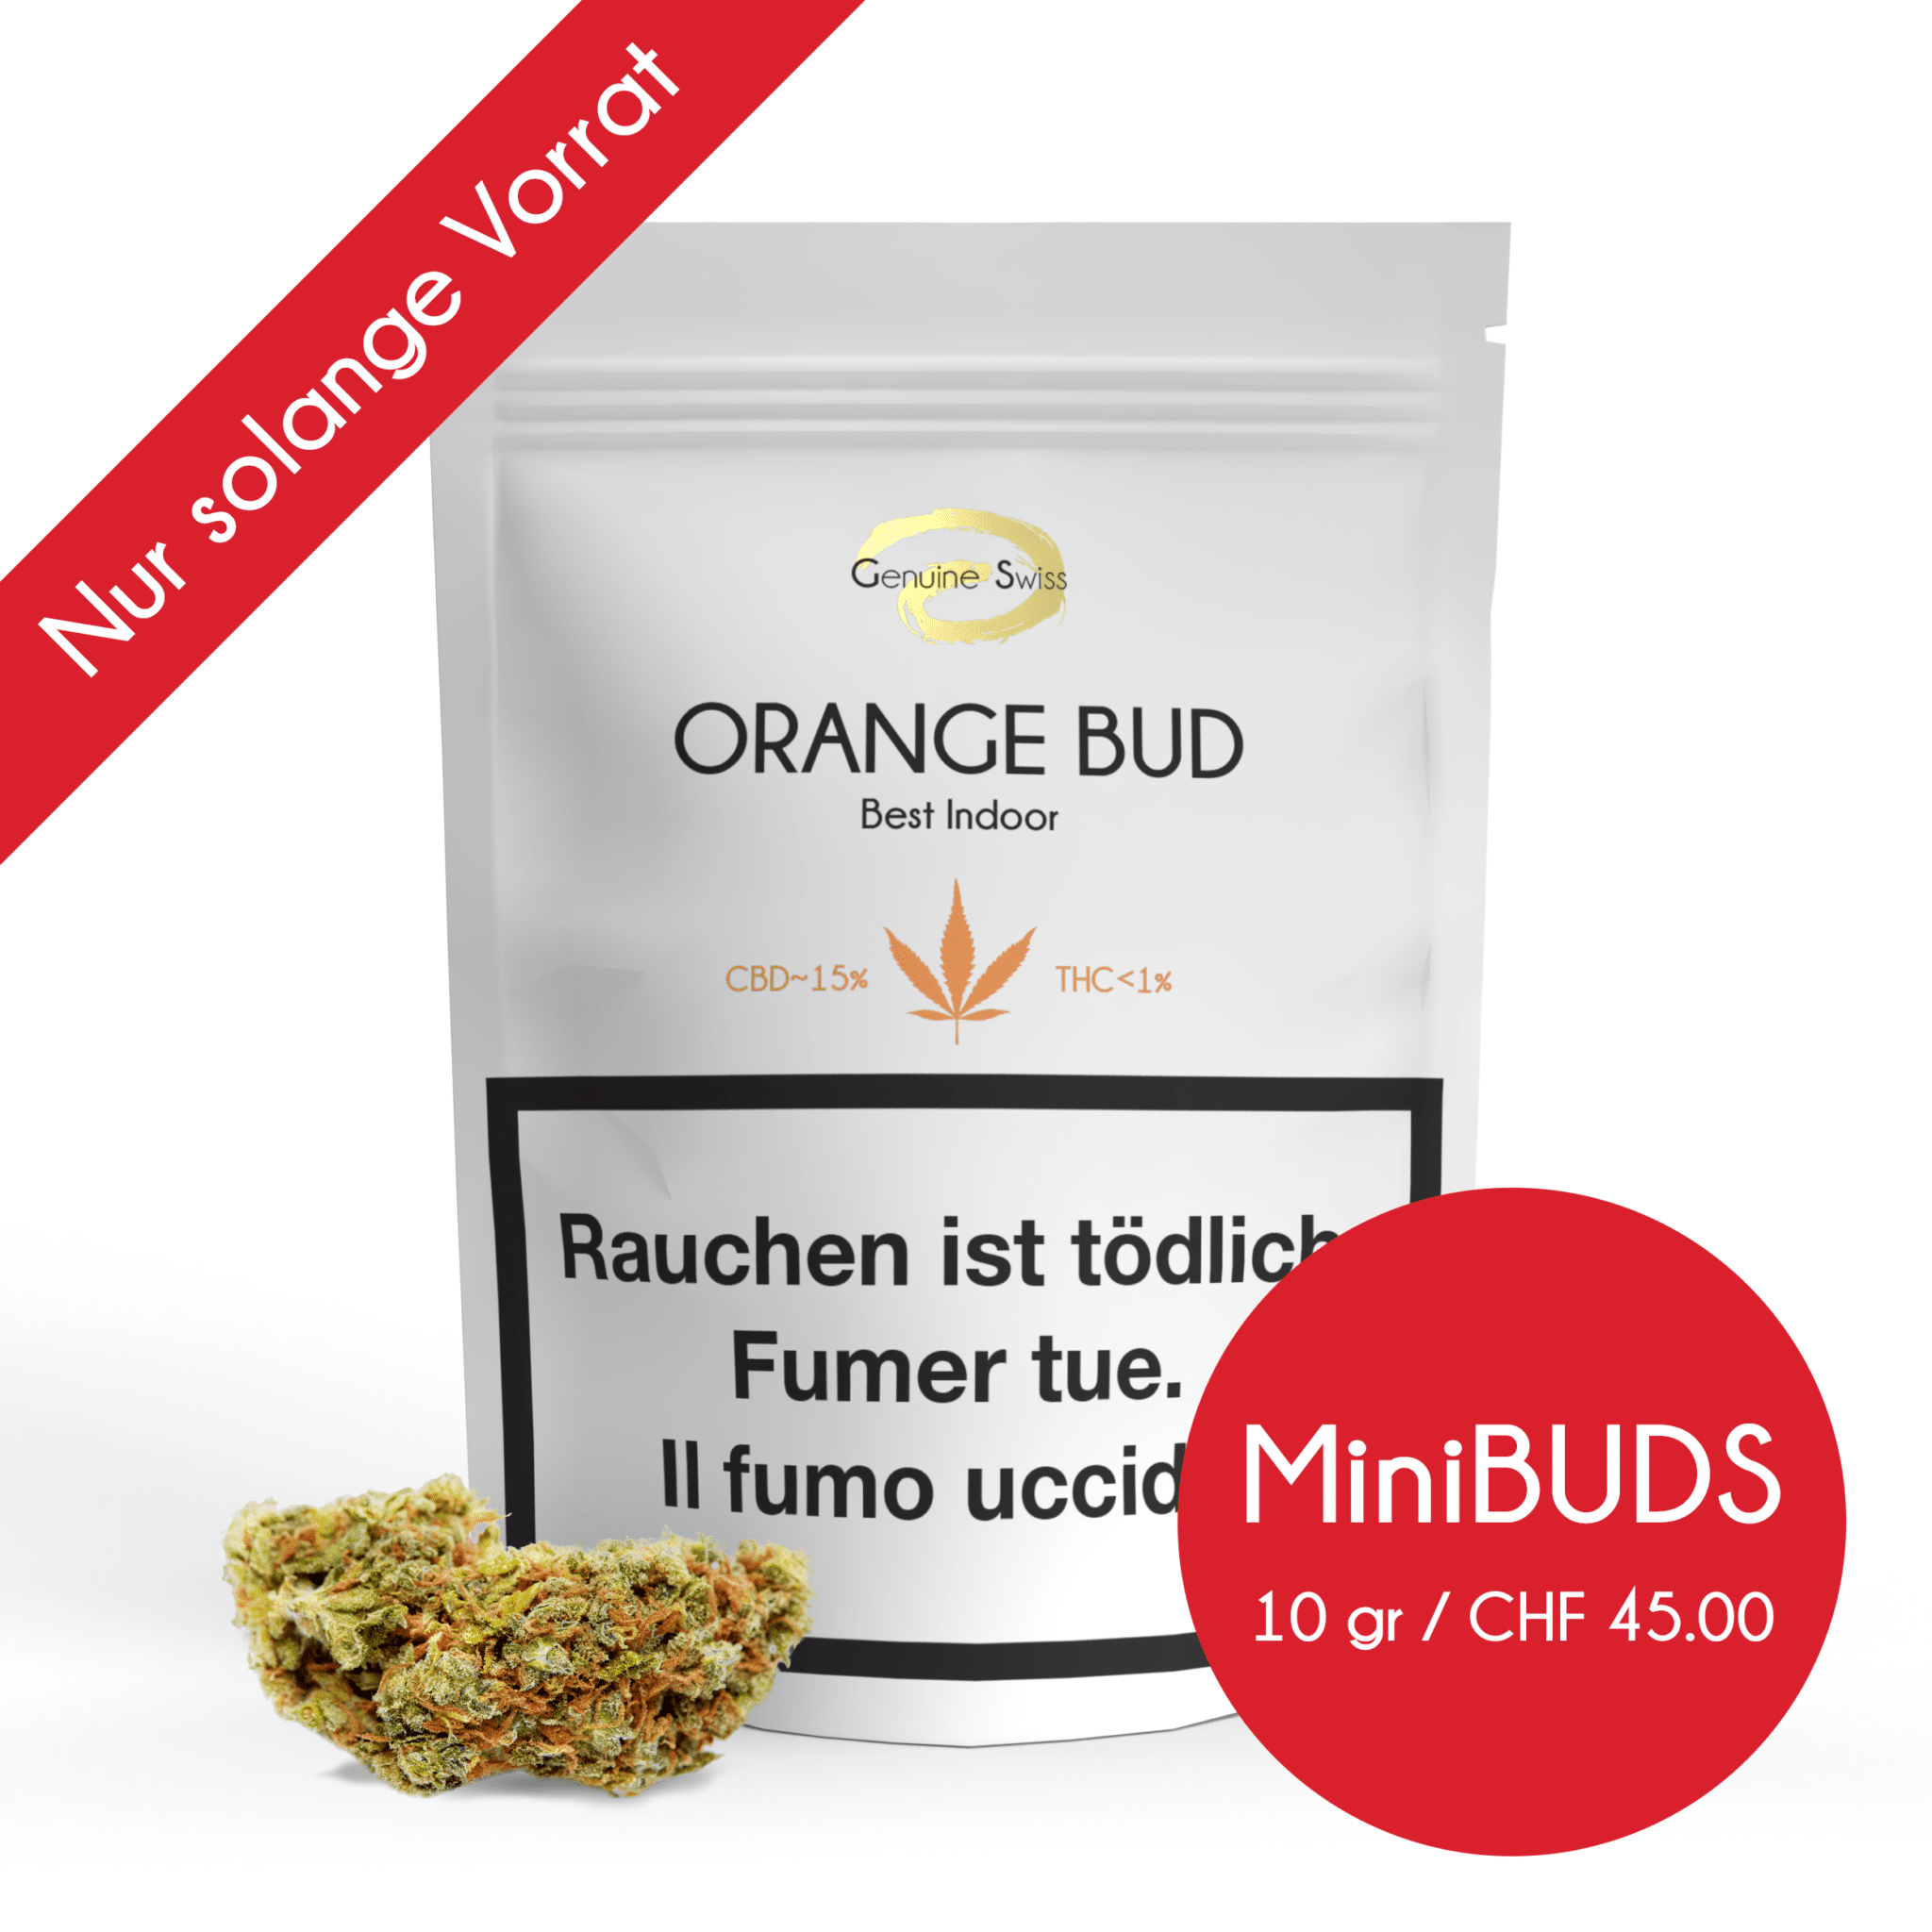 Genuine Swiss Orange Bud Minibuds, Genuine Swiss